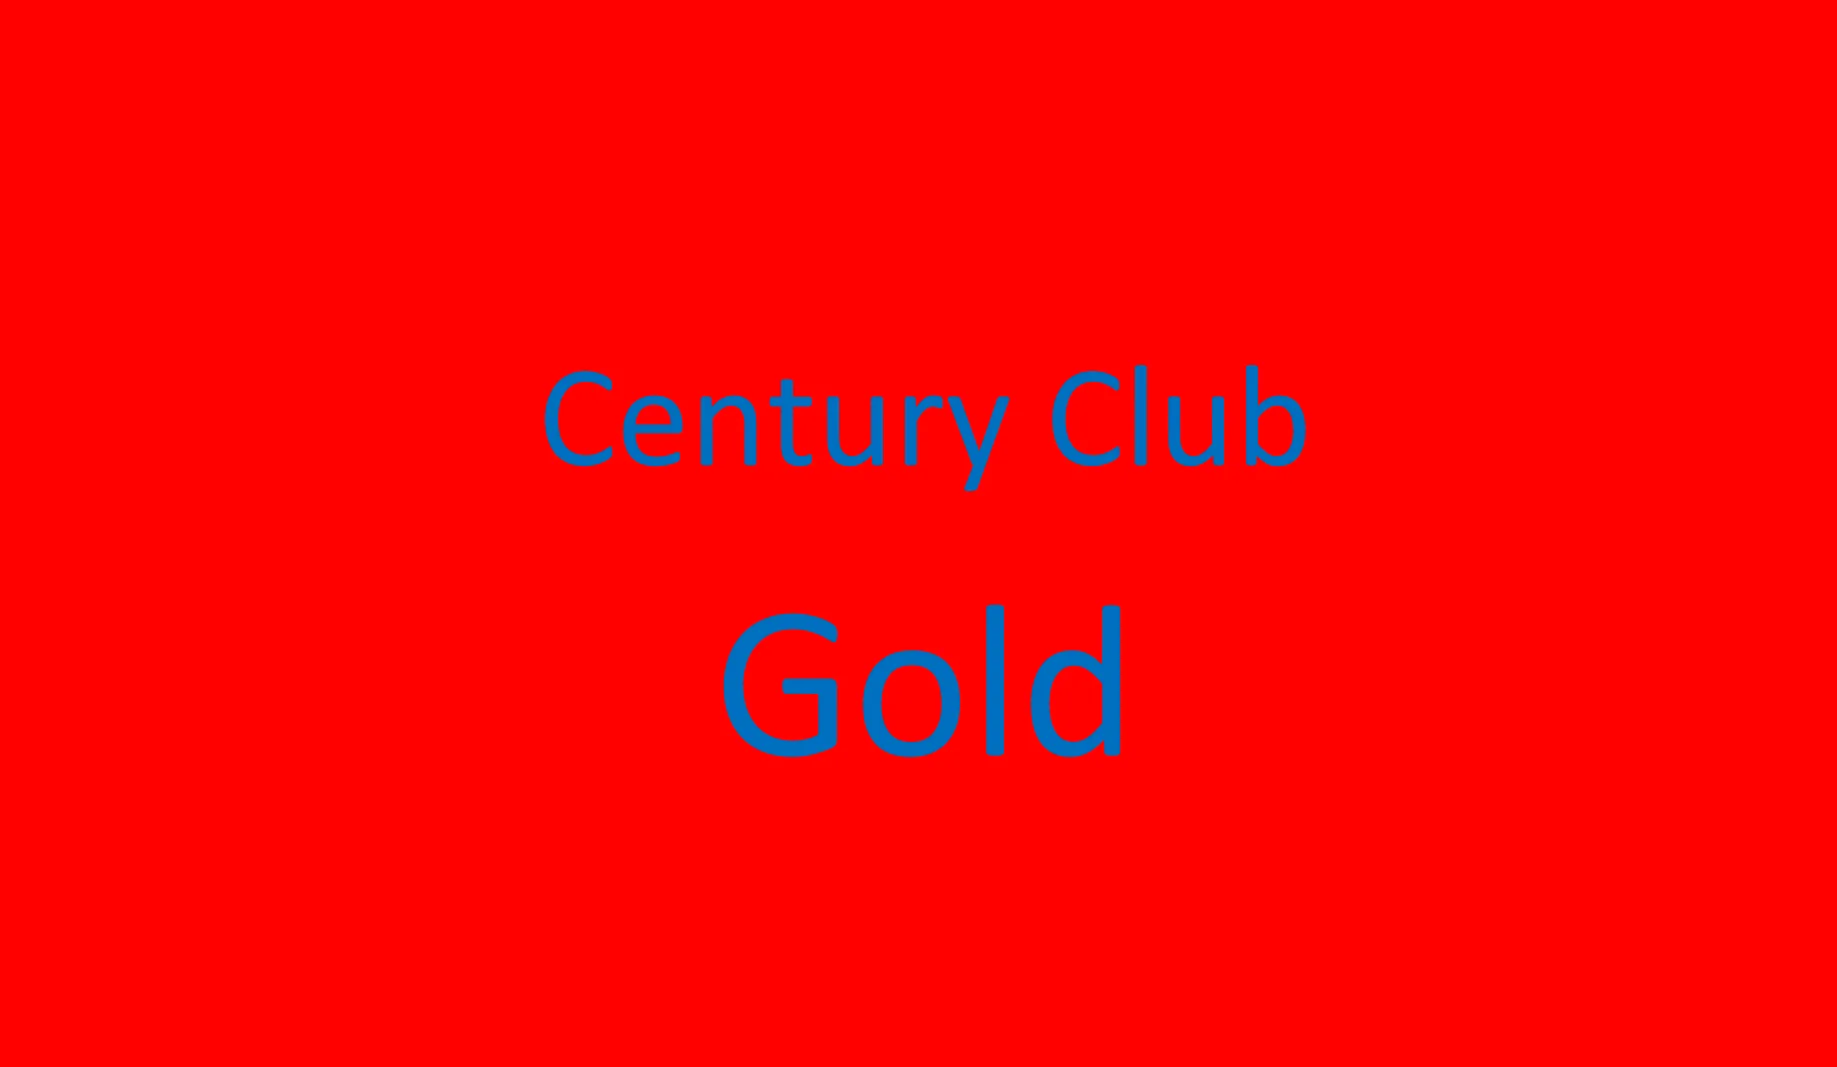 Century Club Gold